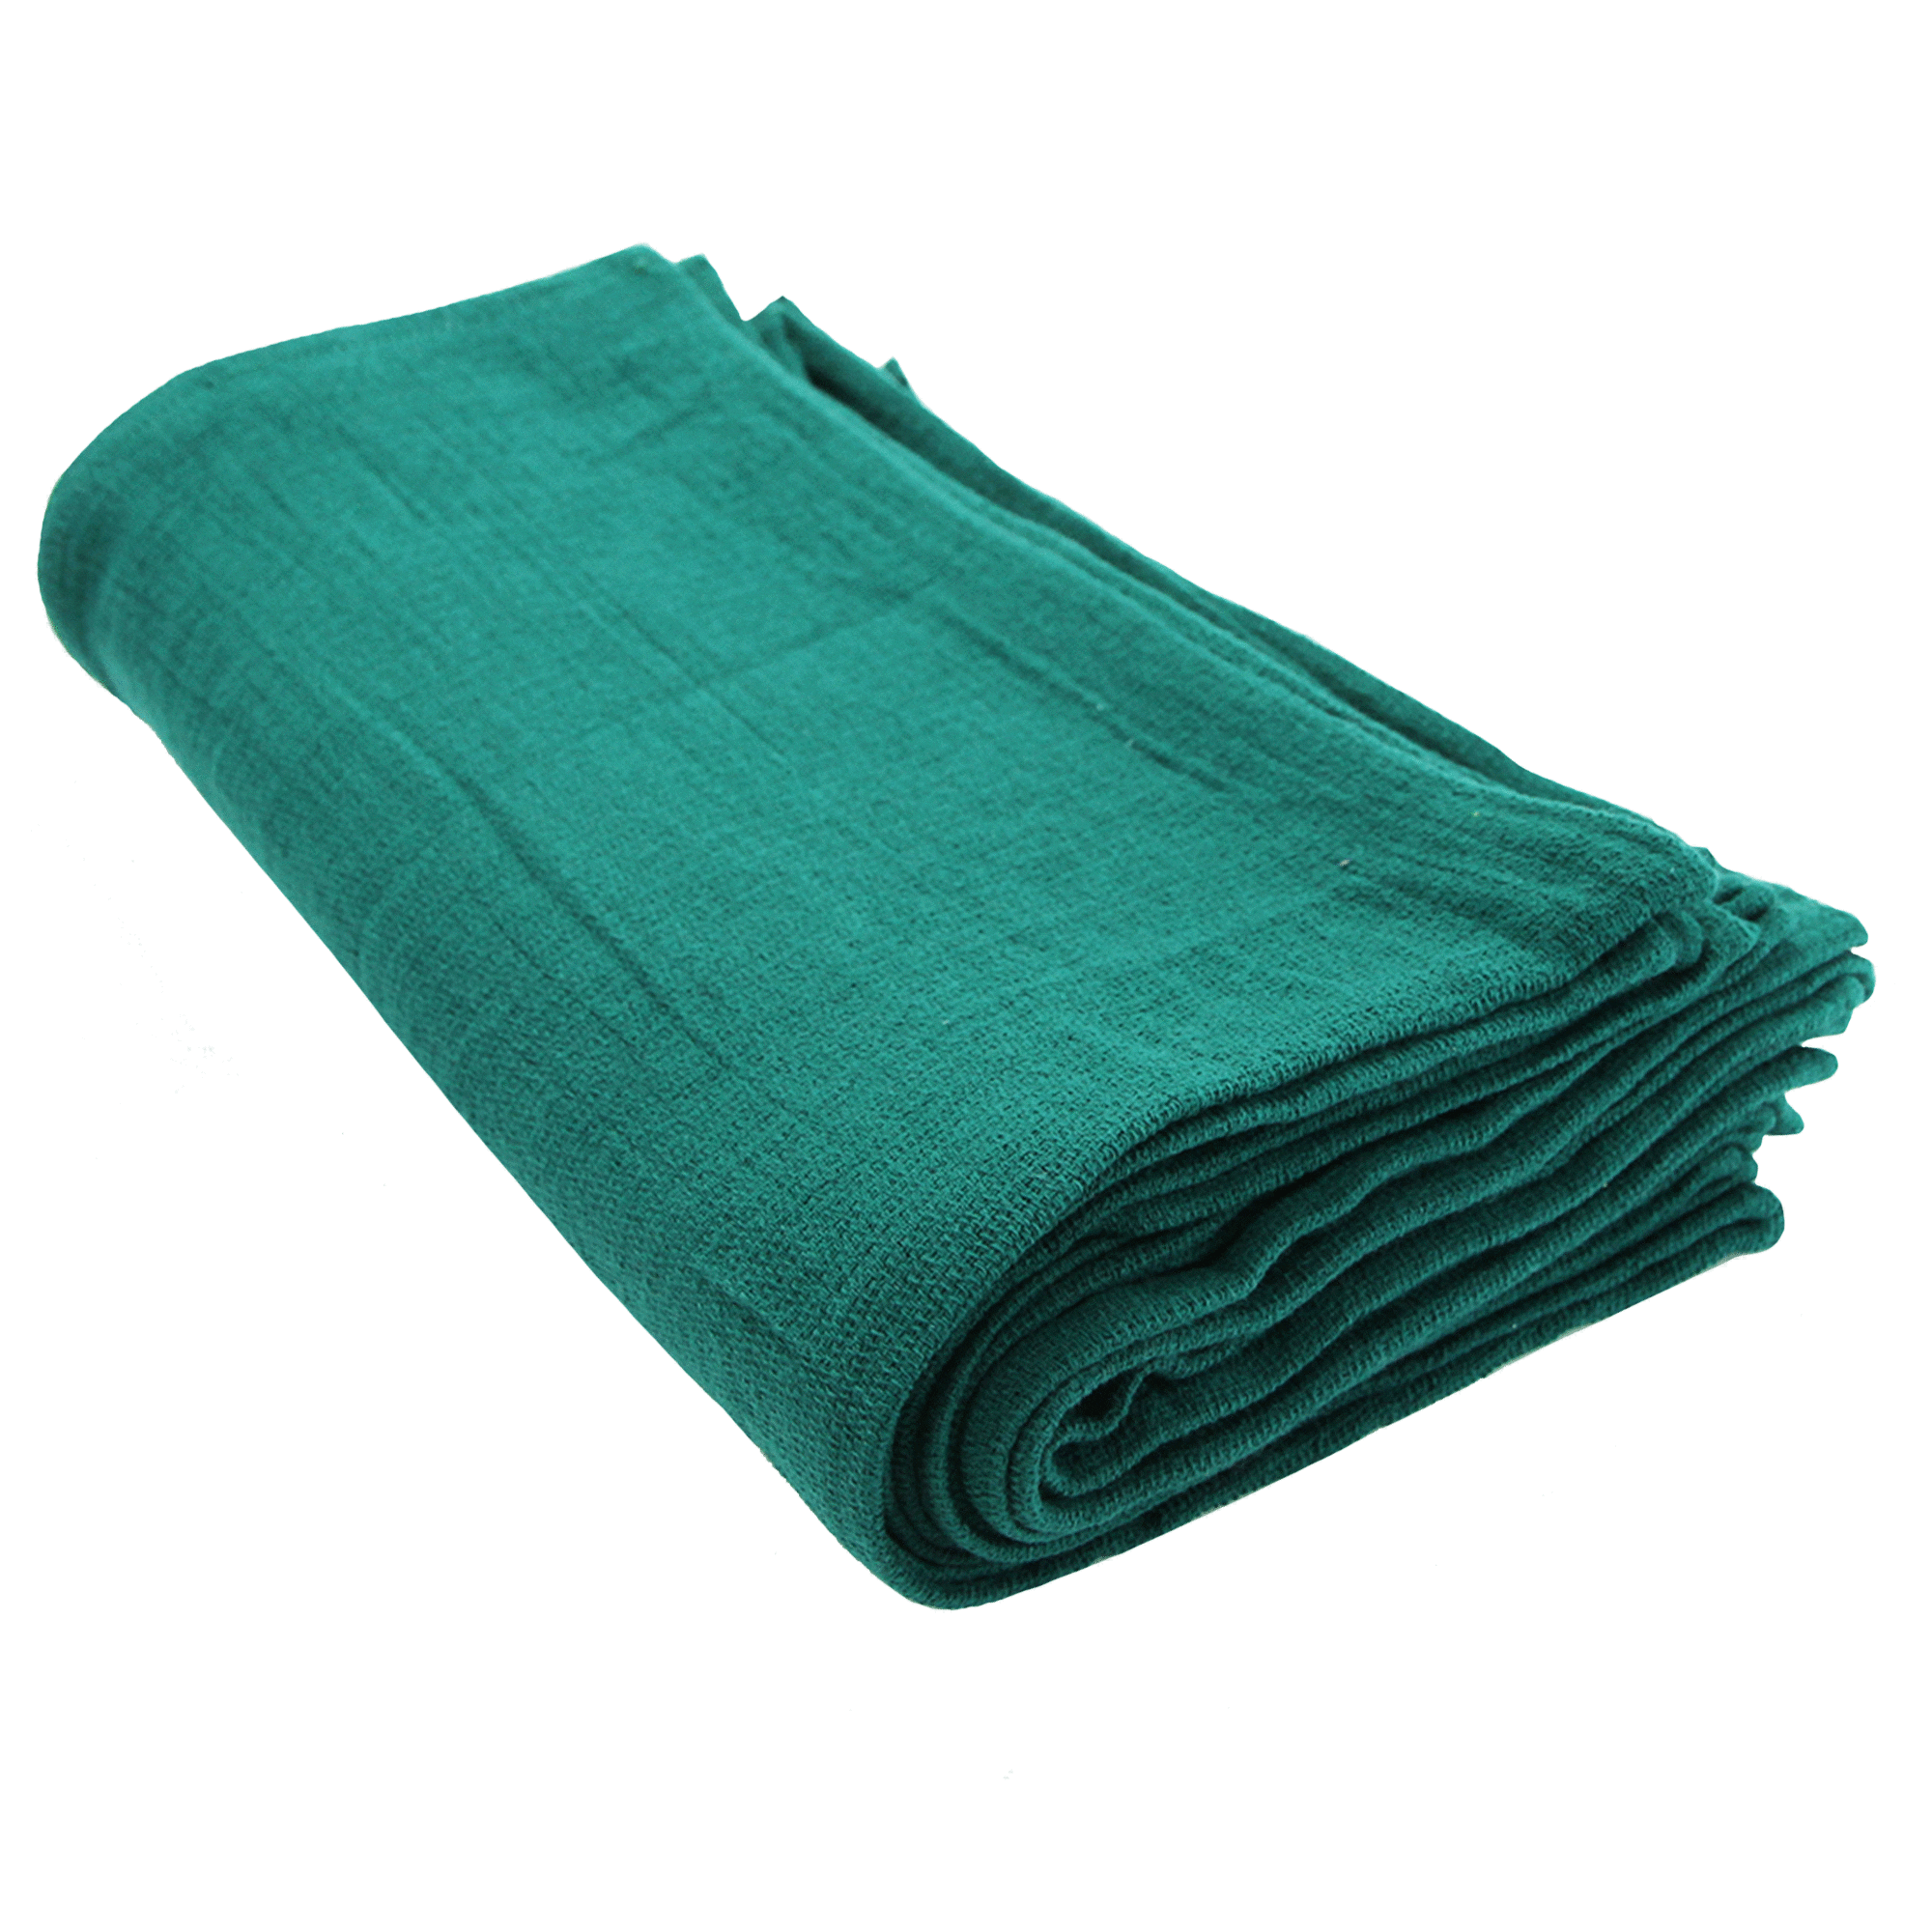 Kimberly Clark - Huck Towels Cloth 15X30 10 Lb. Light Blue